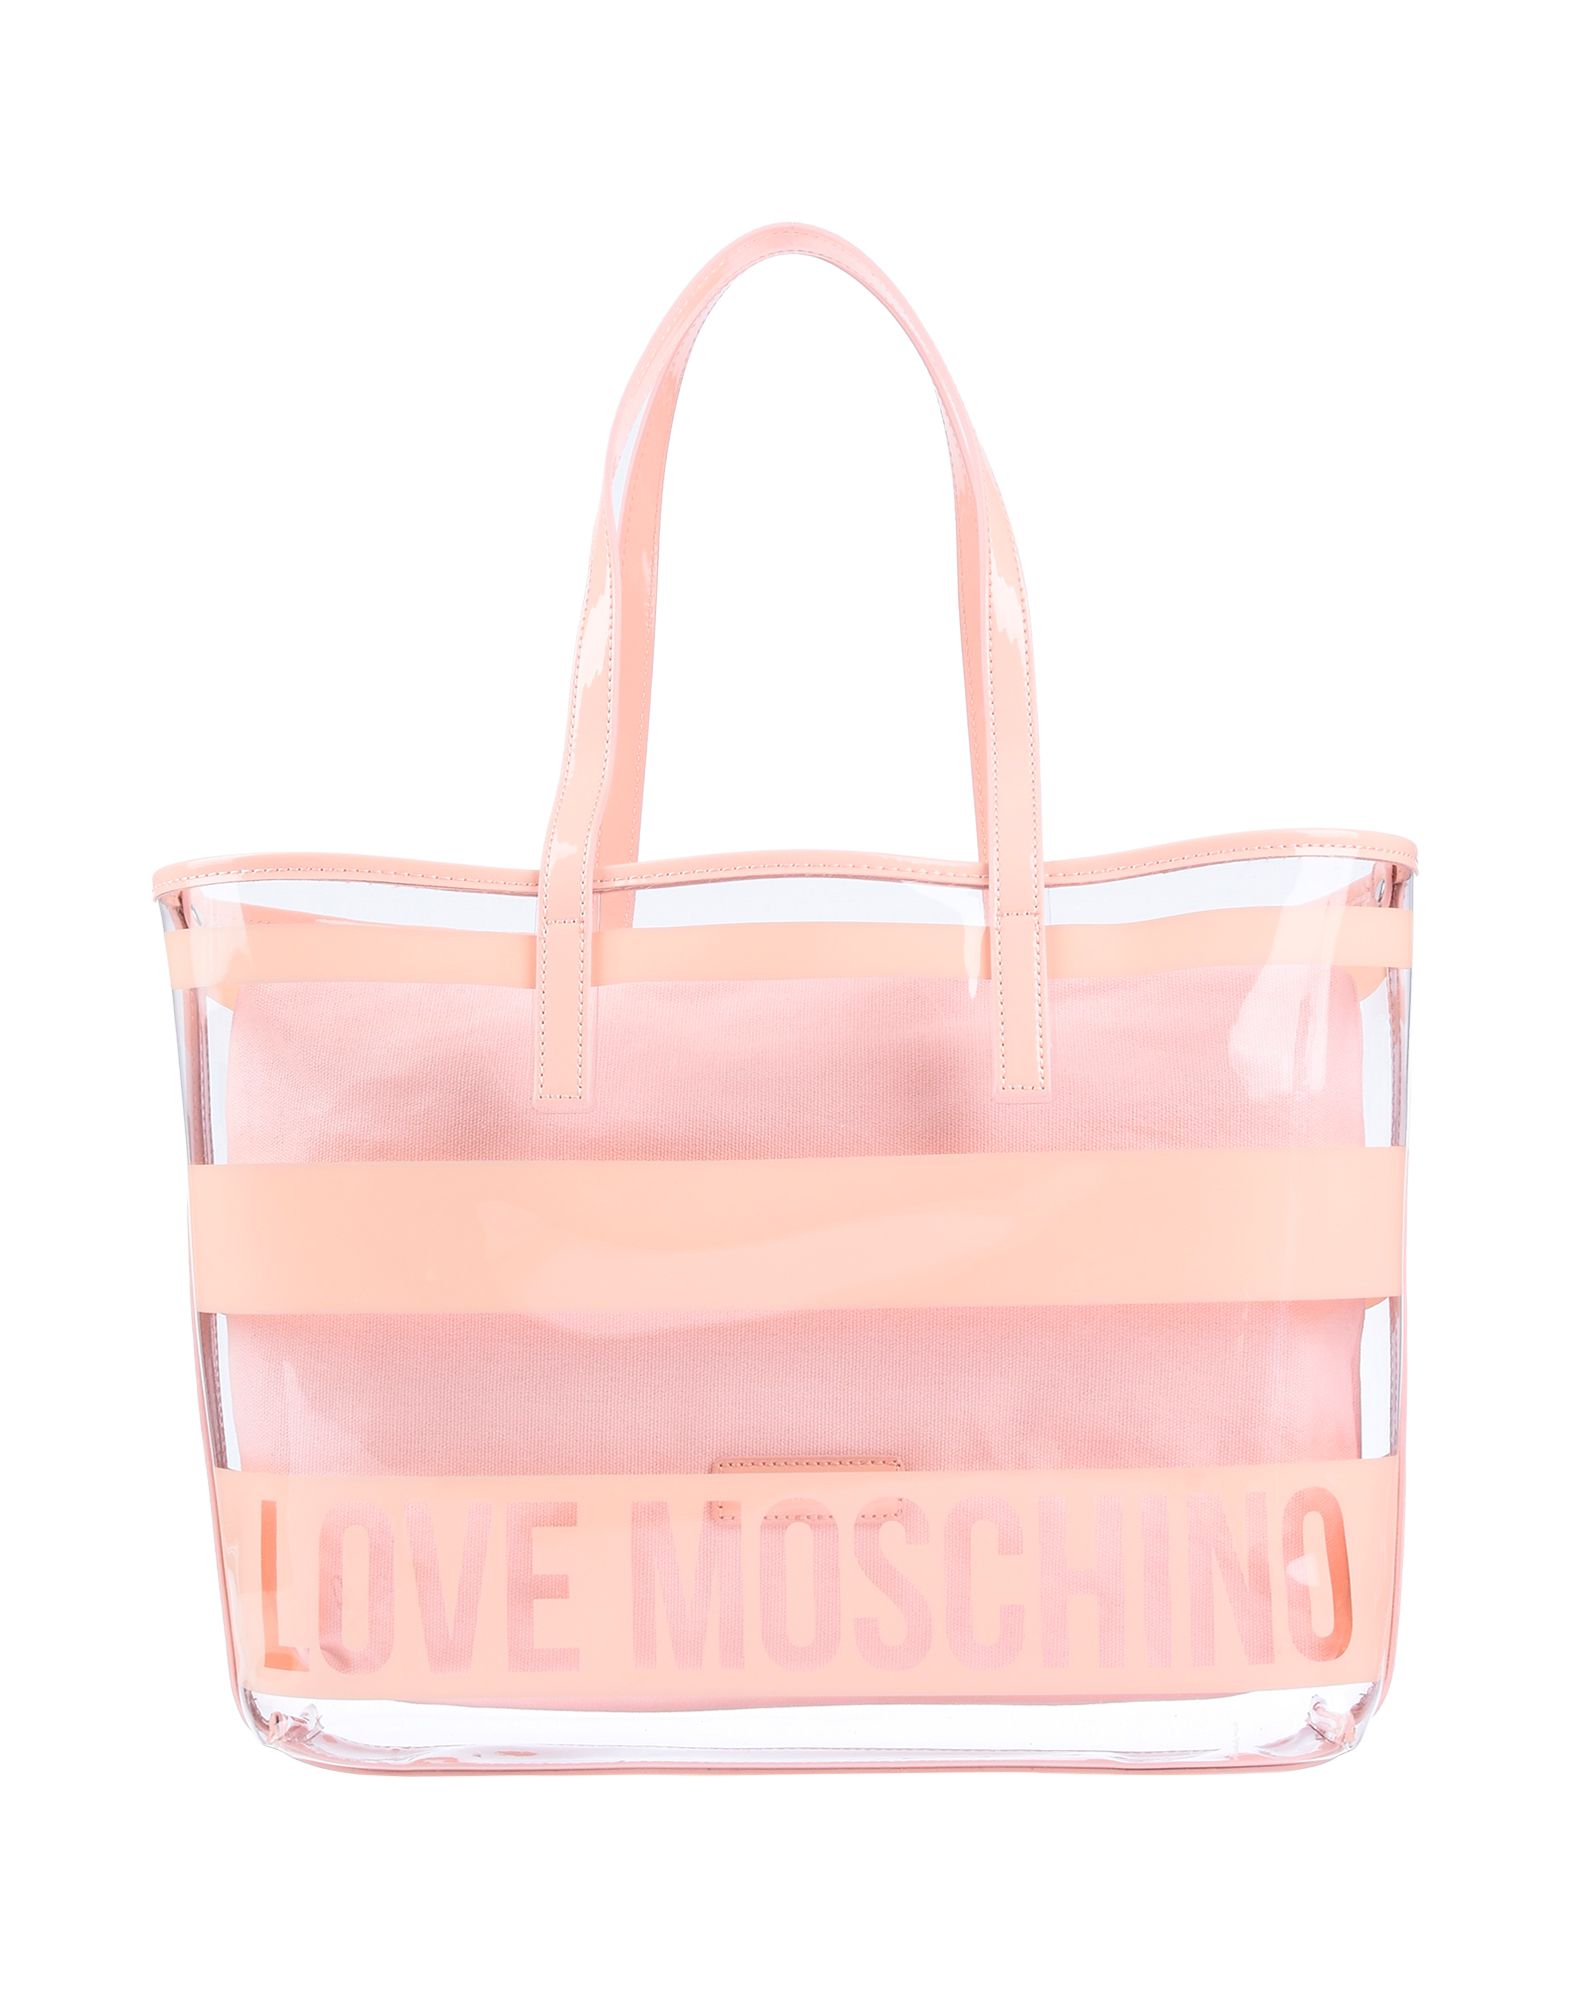 LOVE MOSCHINO Handbags - Item 45445076